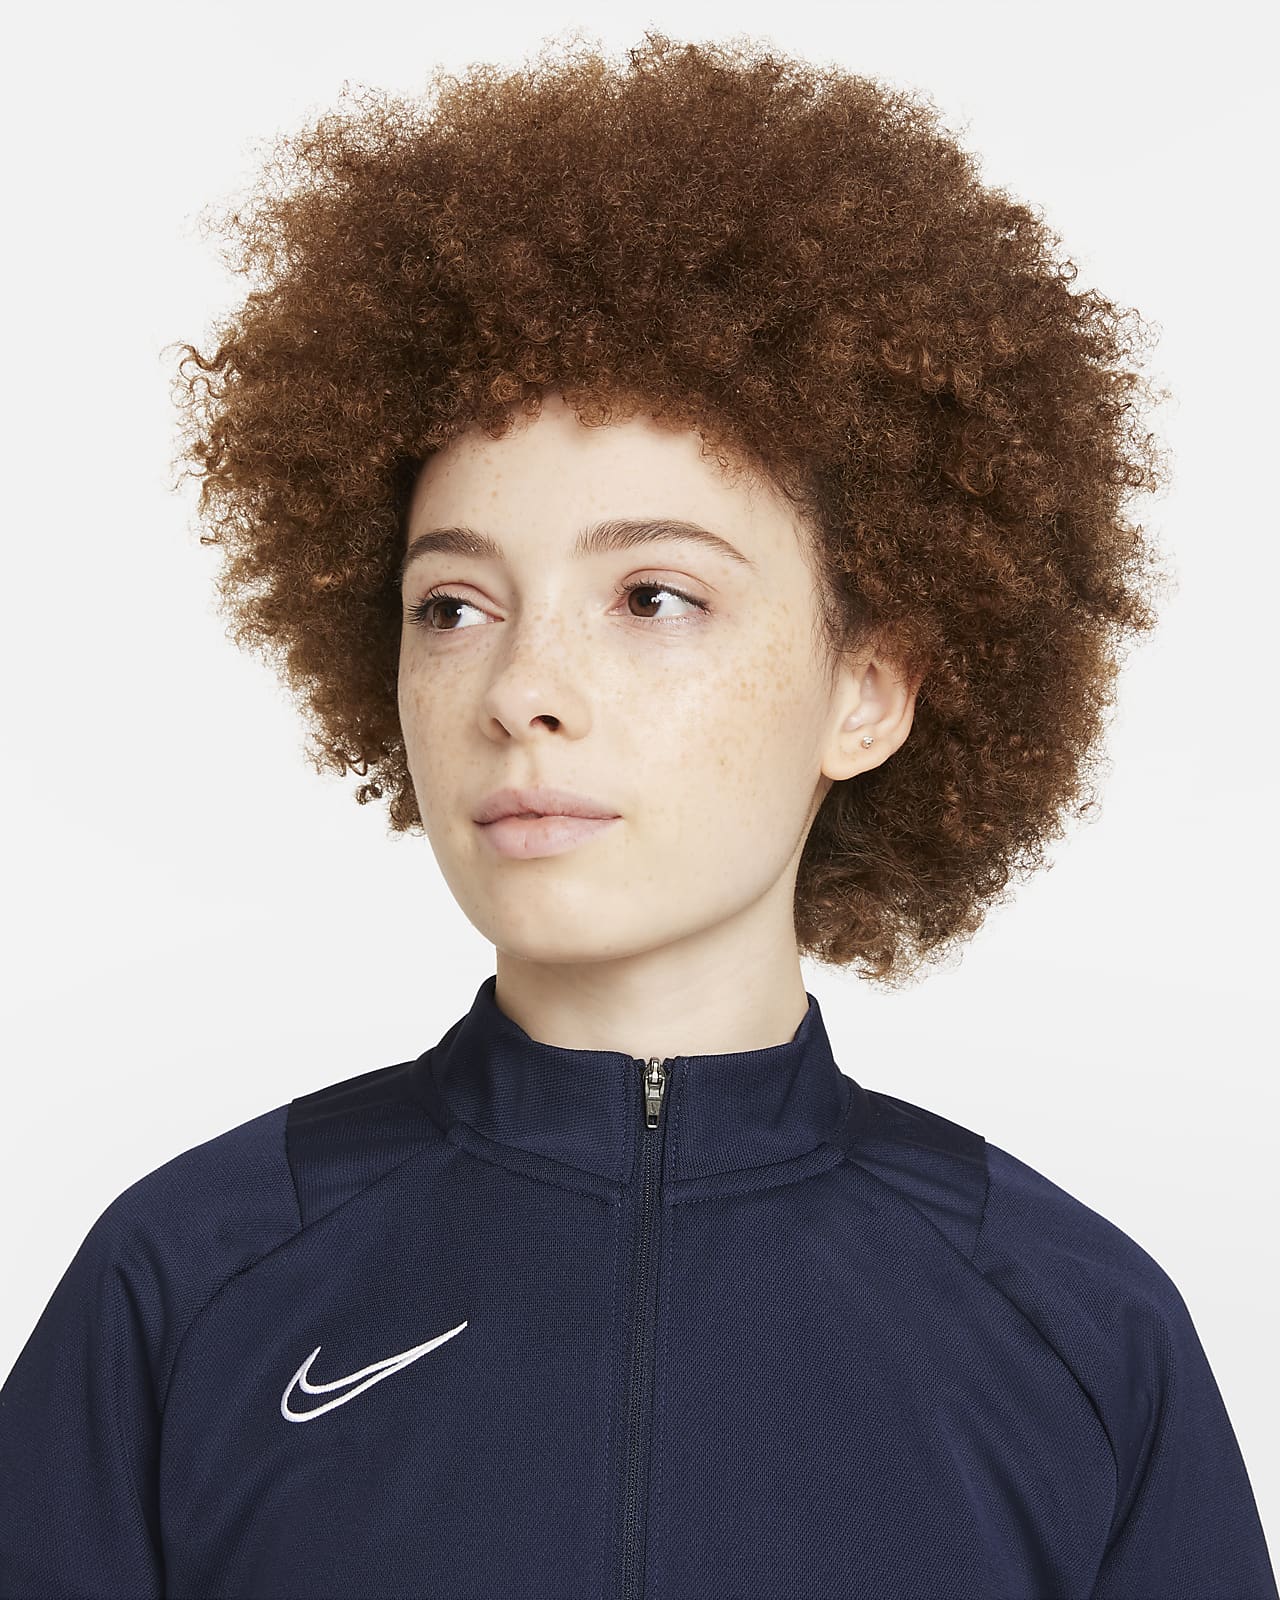 Nike Dri-FIT Academy Women's Hoodie